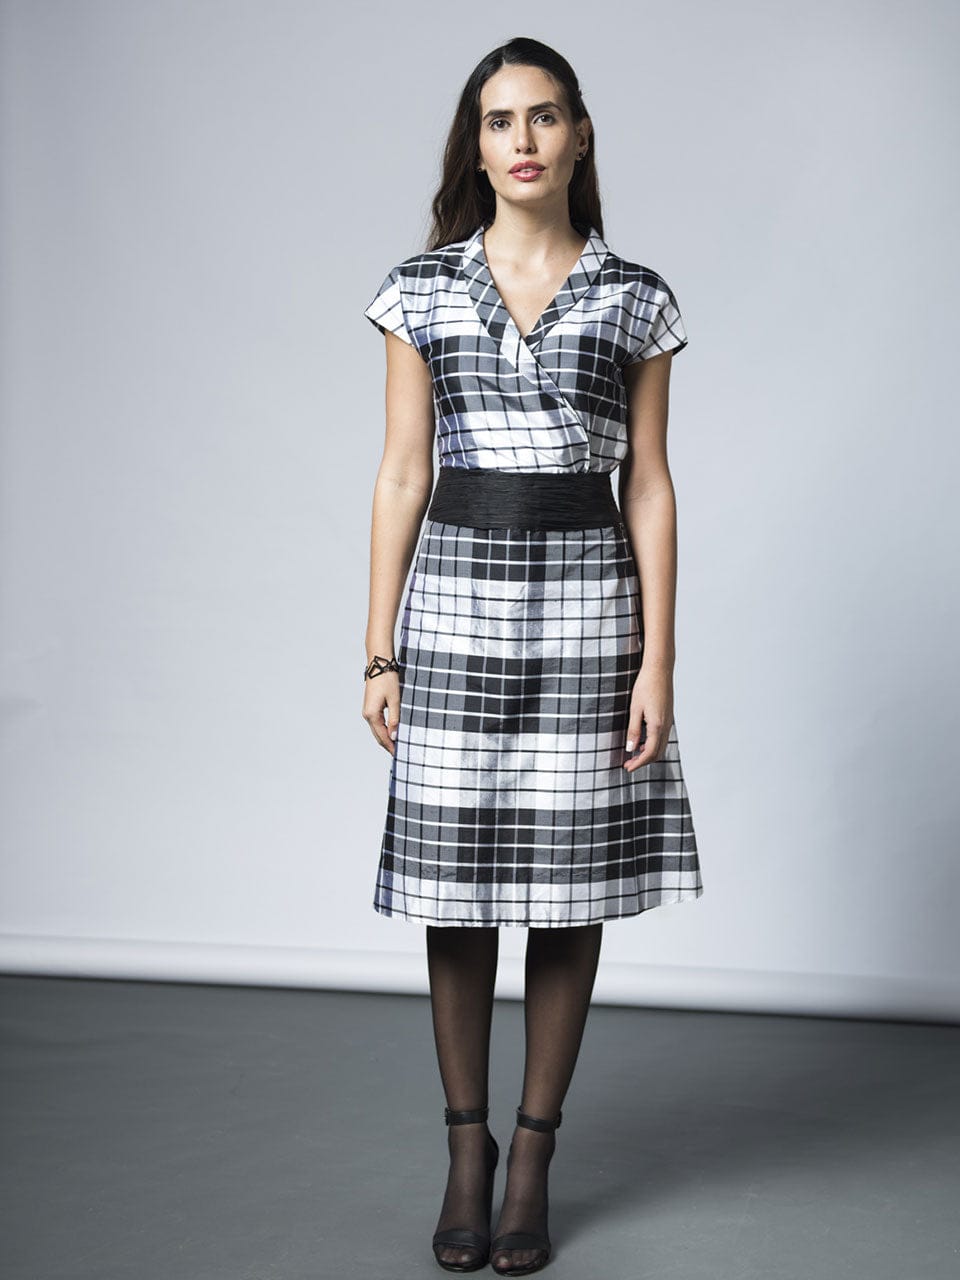 Wrap-effect Checkered Top + Checkered Skirt